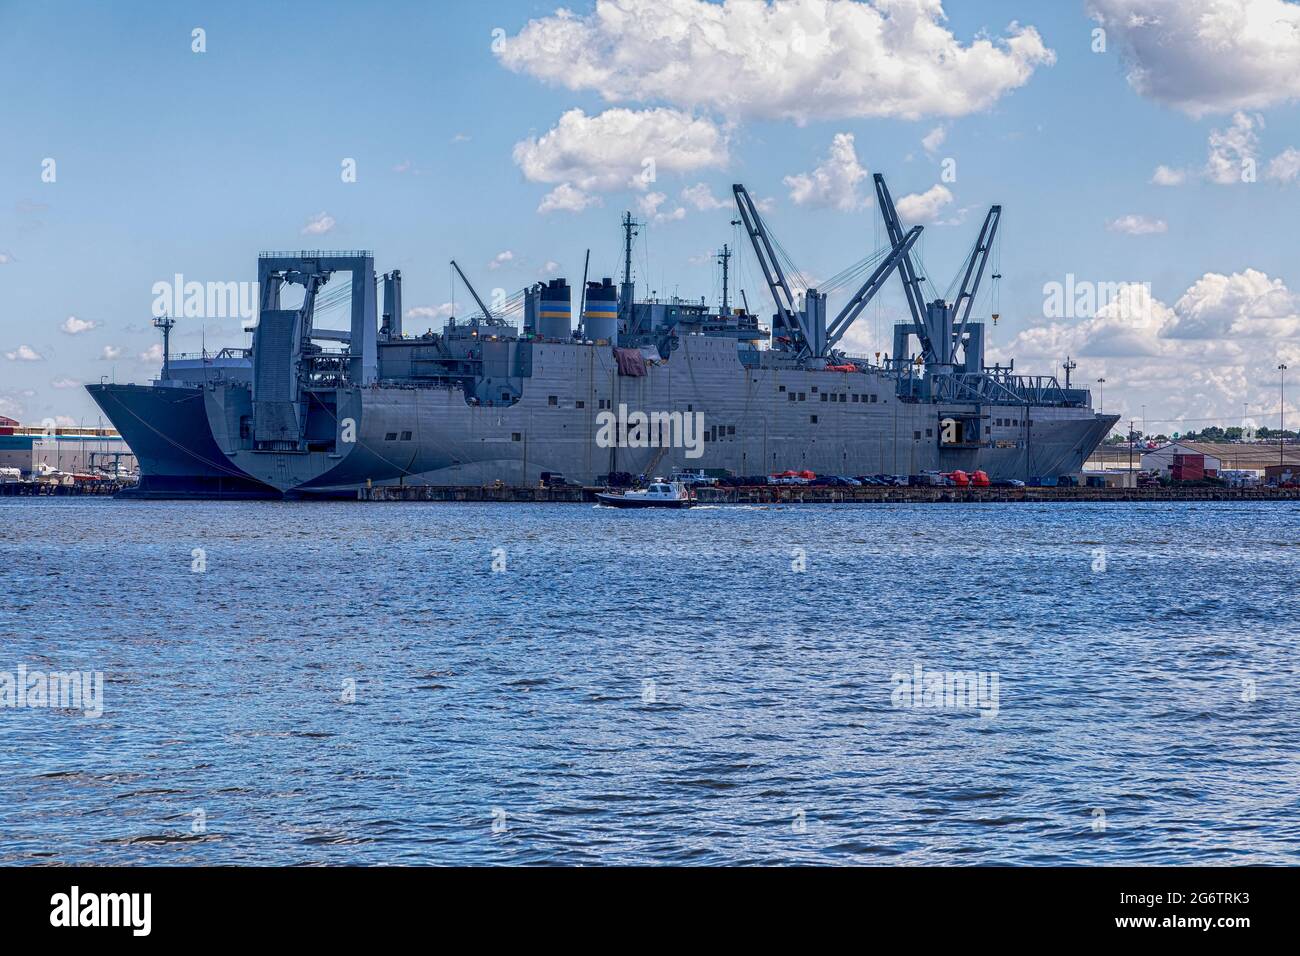 USNS Gordon, un buque de carga rodante/rodante asignado al Comando Militar de Seallift y mantenido en Canton, Baltimore, cerca de Fort McHenry. Foto de stock